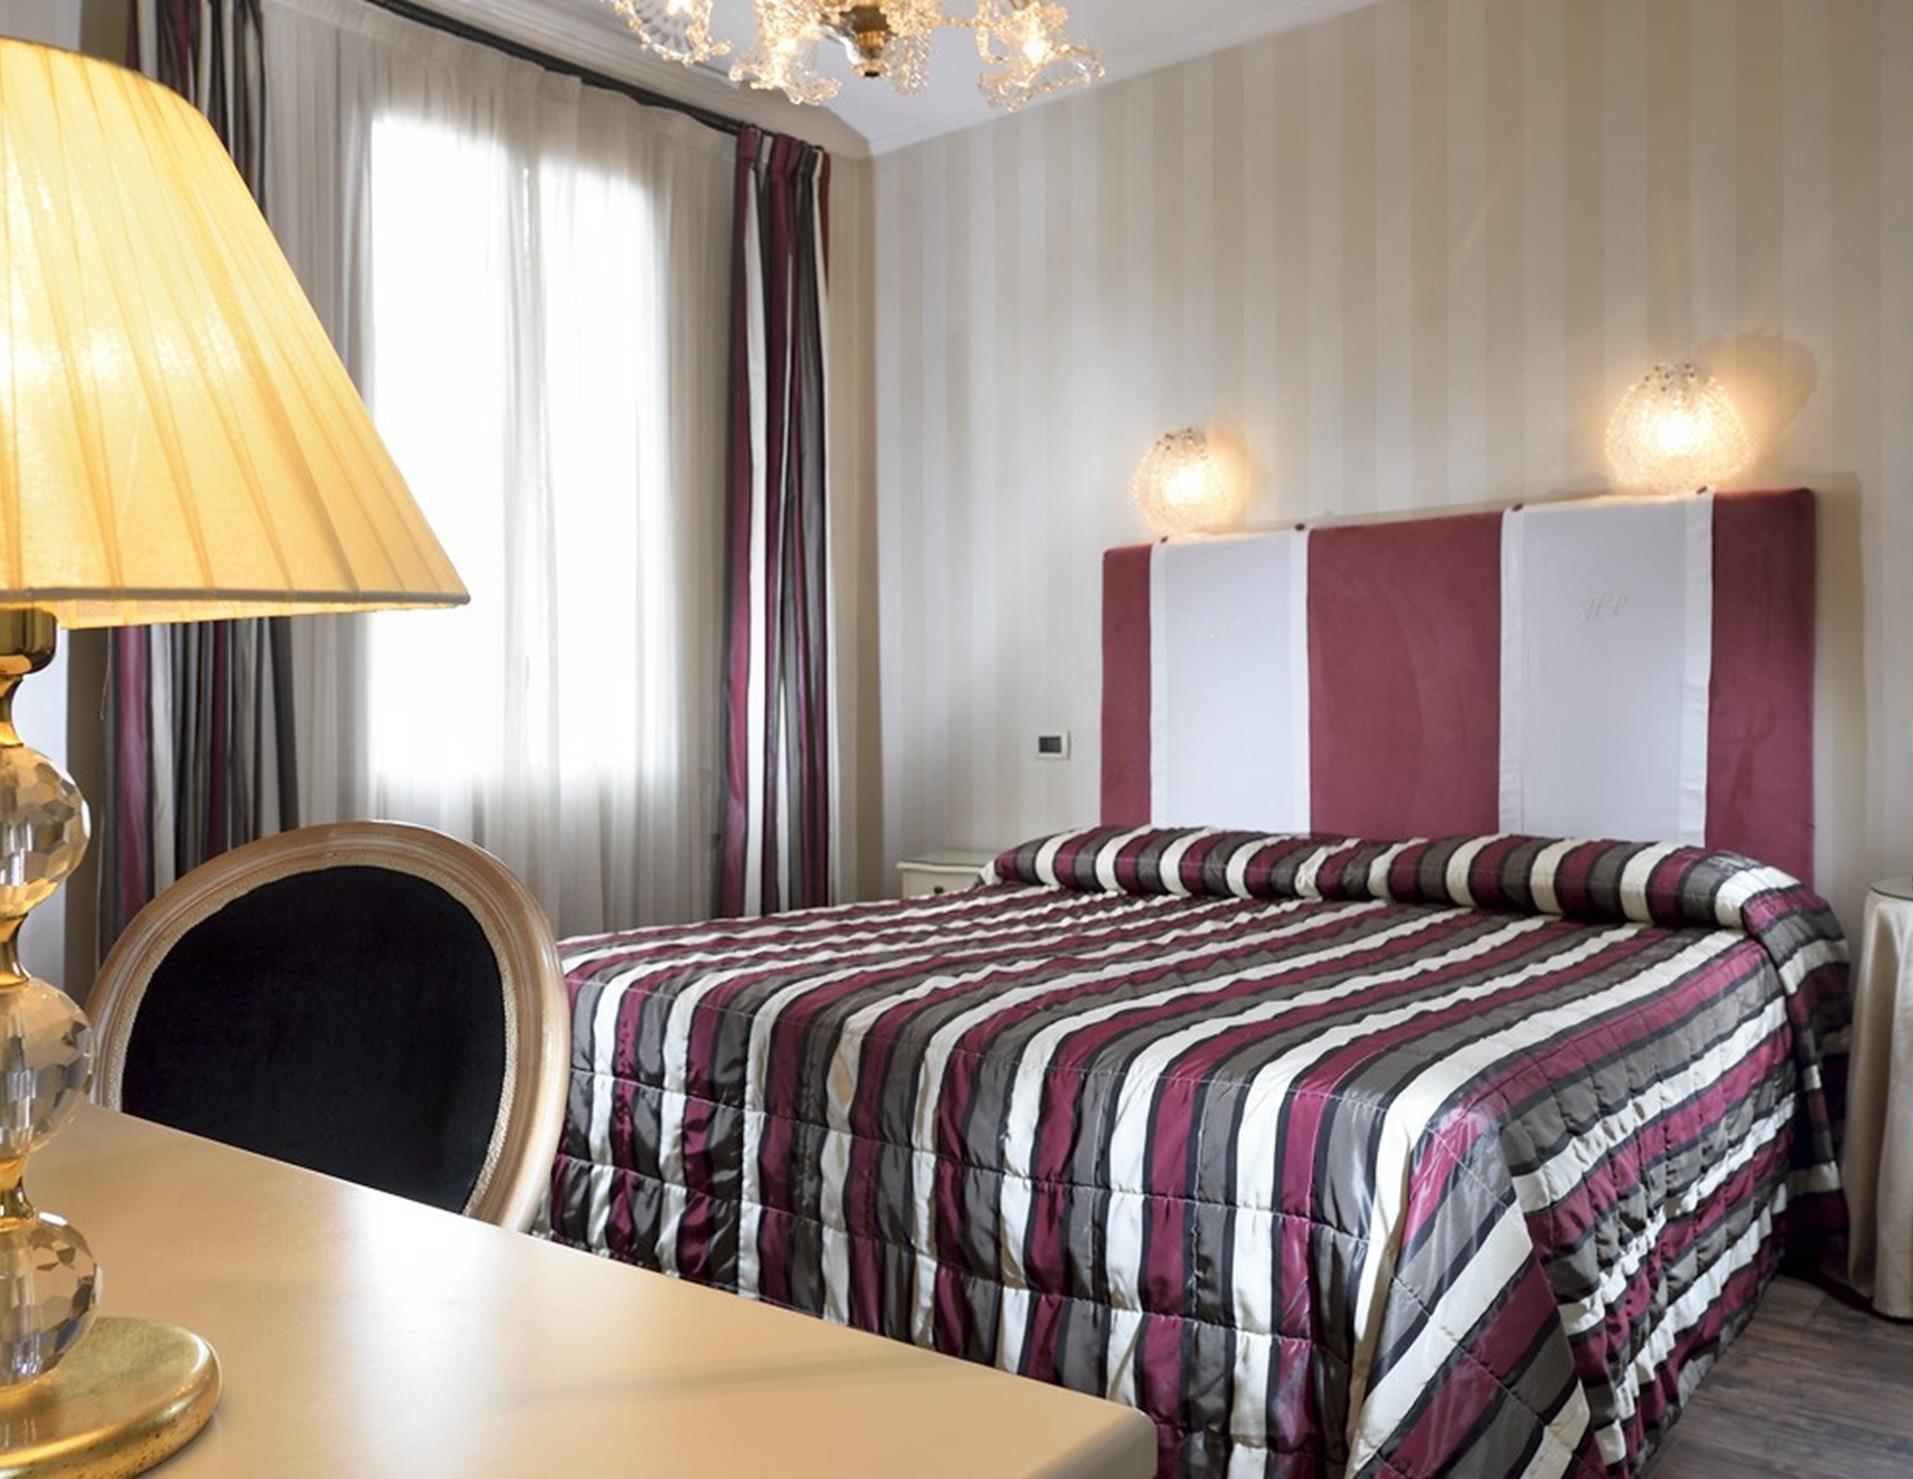 Hotel Principe - Room 6